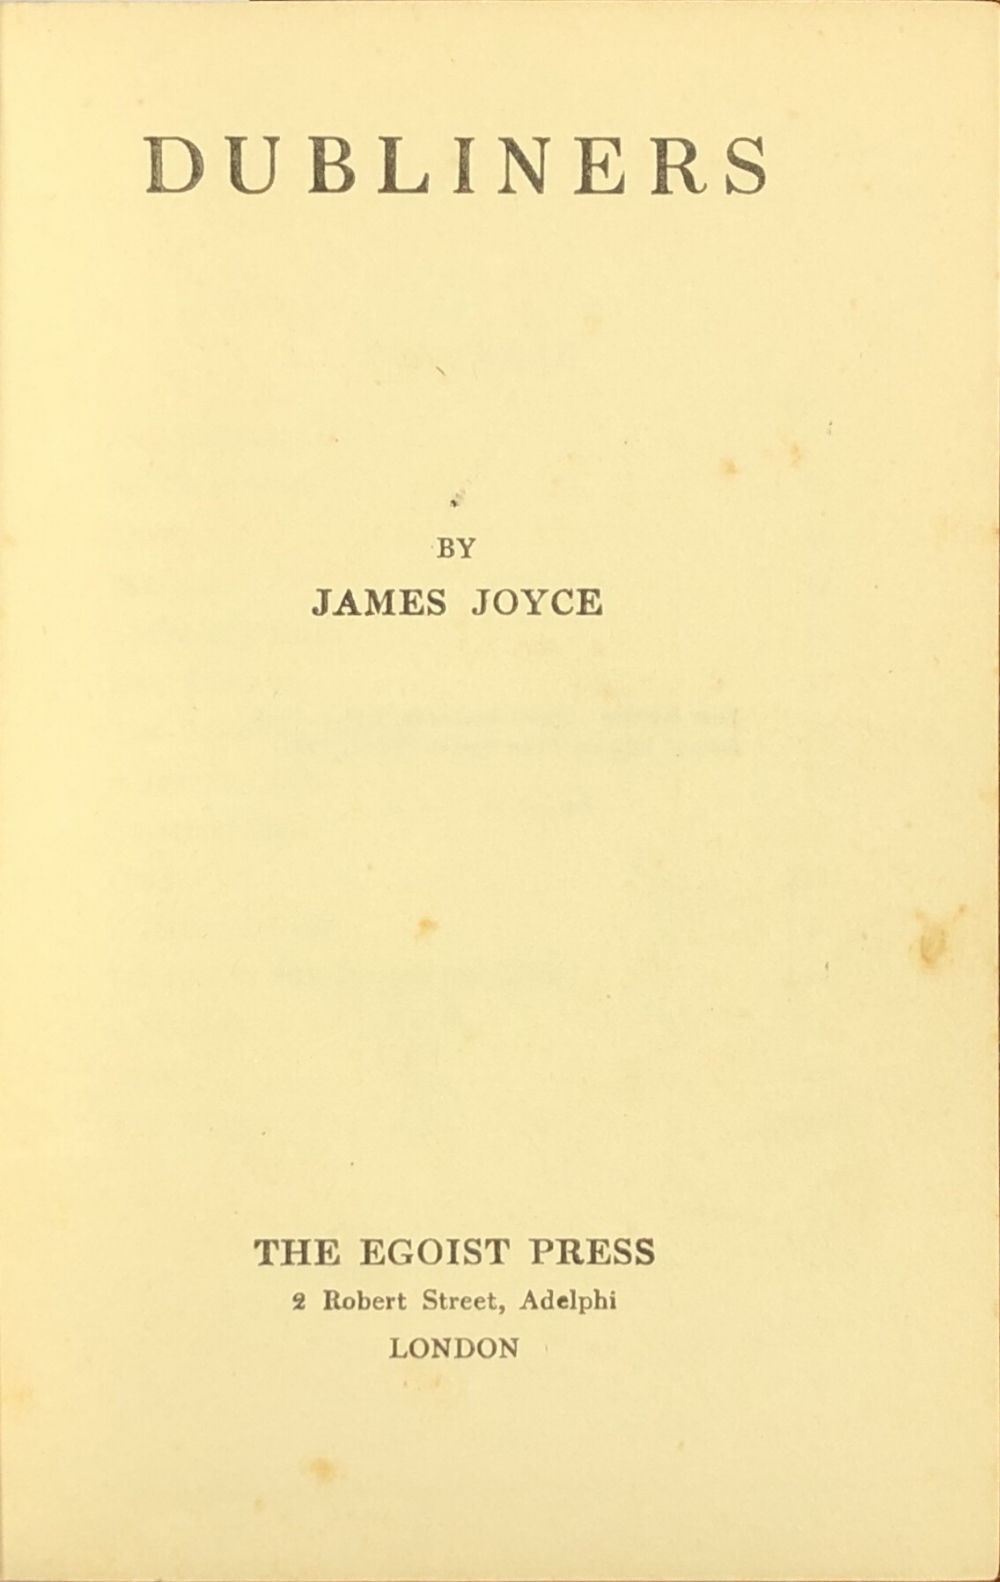 Joyce (James) Dubliners, 8vo L. (The Egoist Press) 1922, Second Edn., hf.